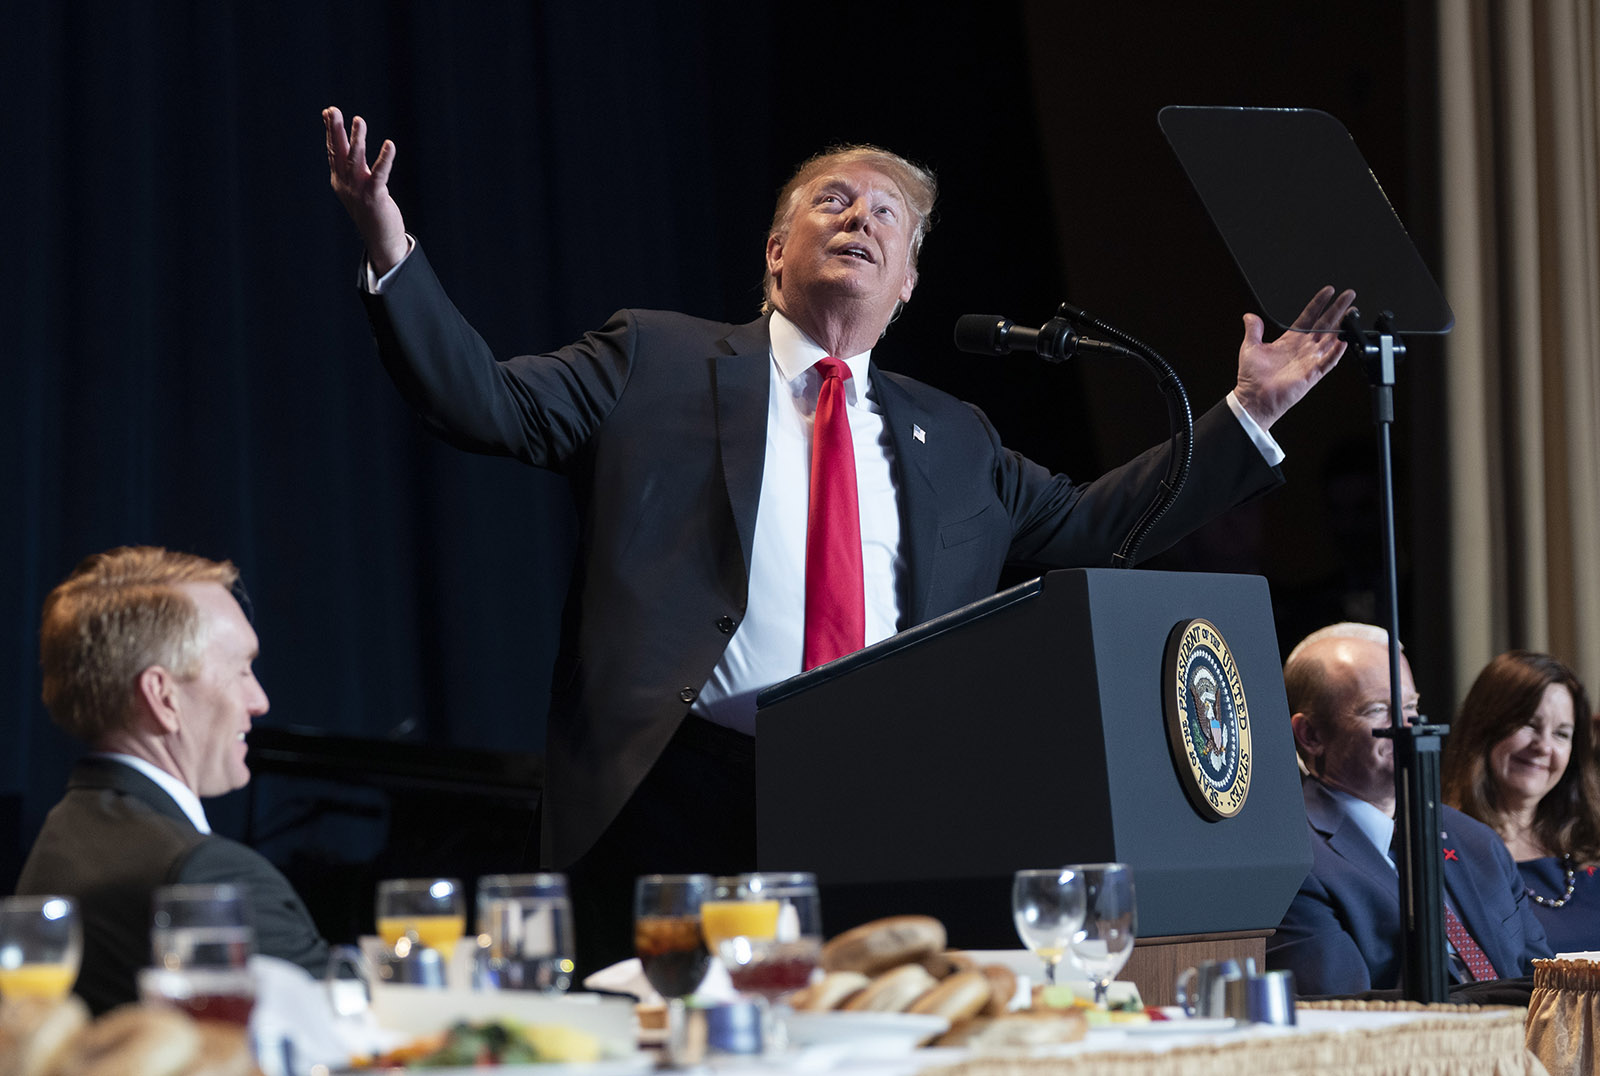 President Donald Trump speaking at the National Prayer Breakfast, Washington, D.C., February 7, 2019